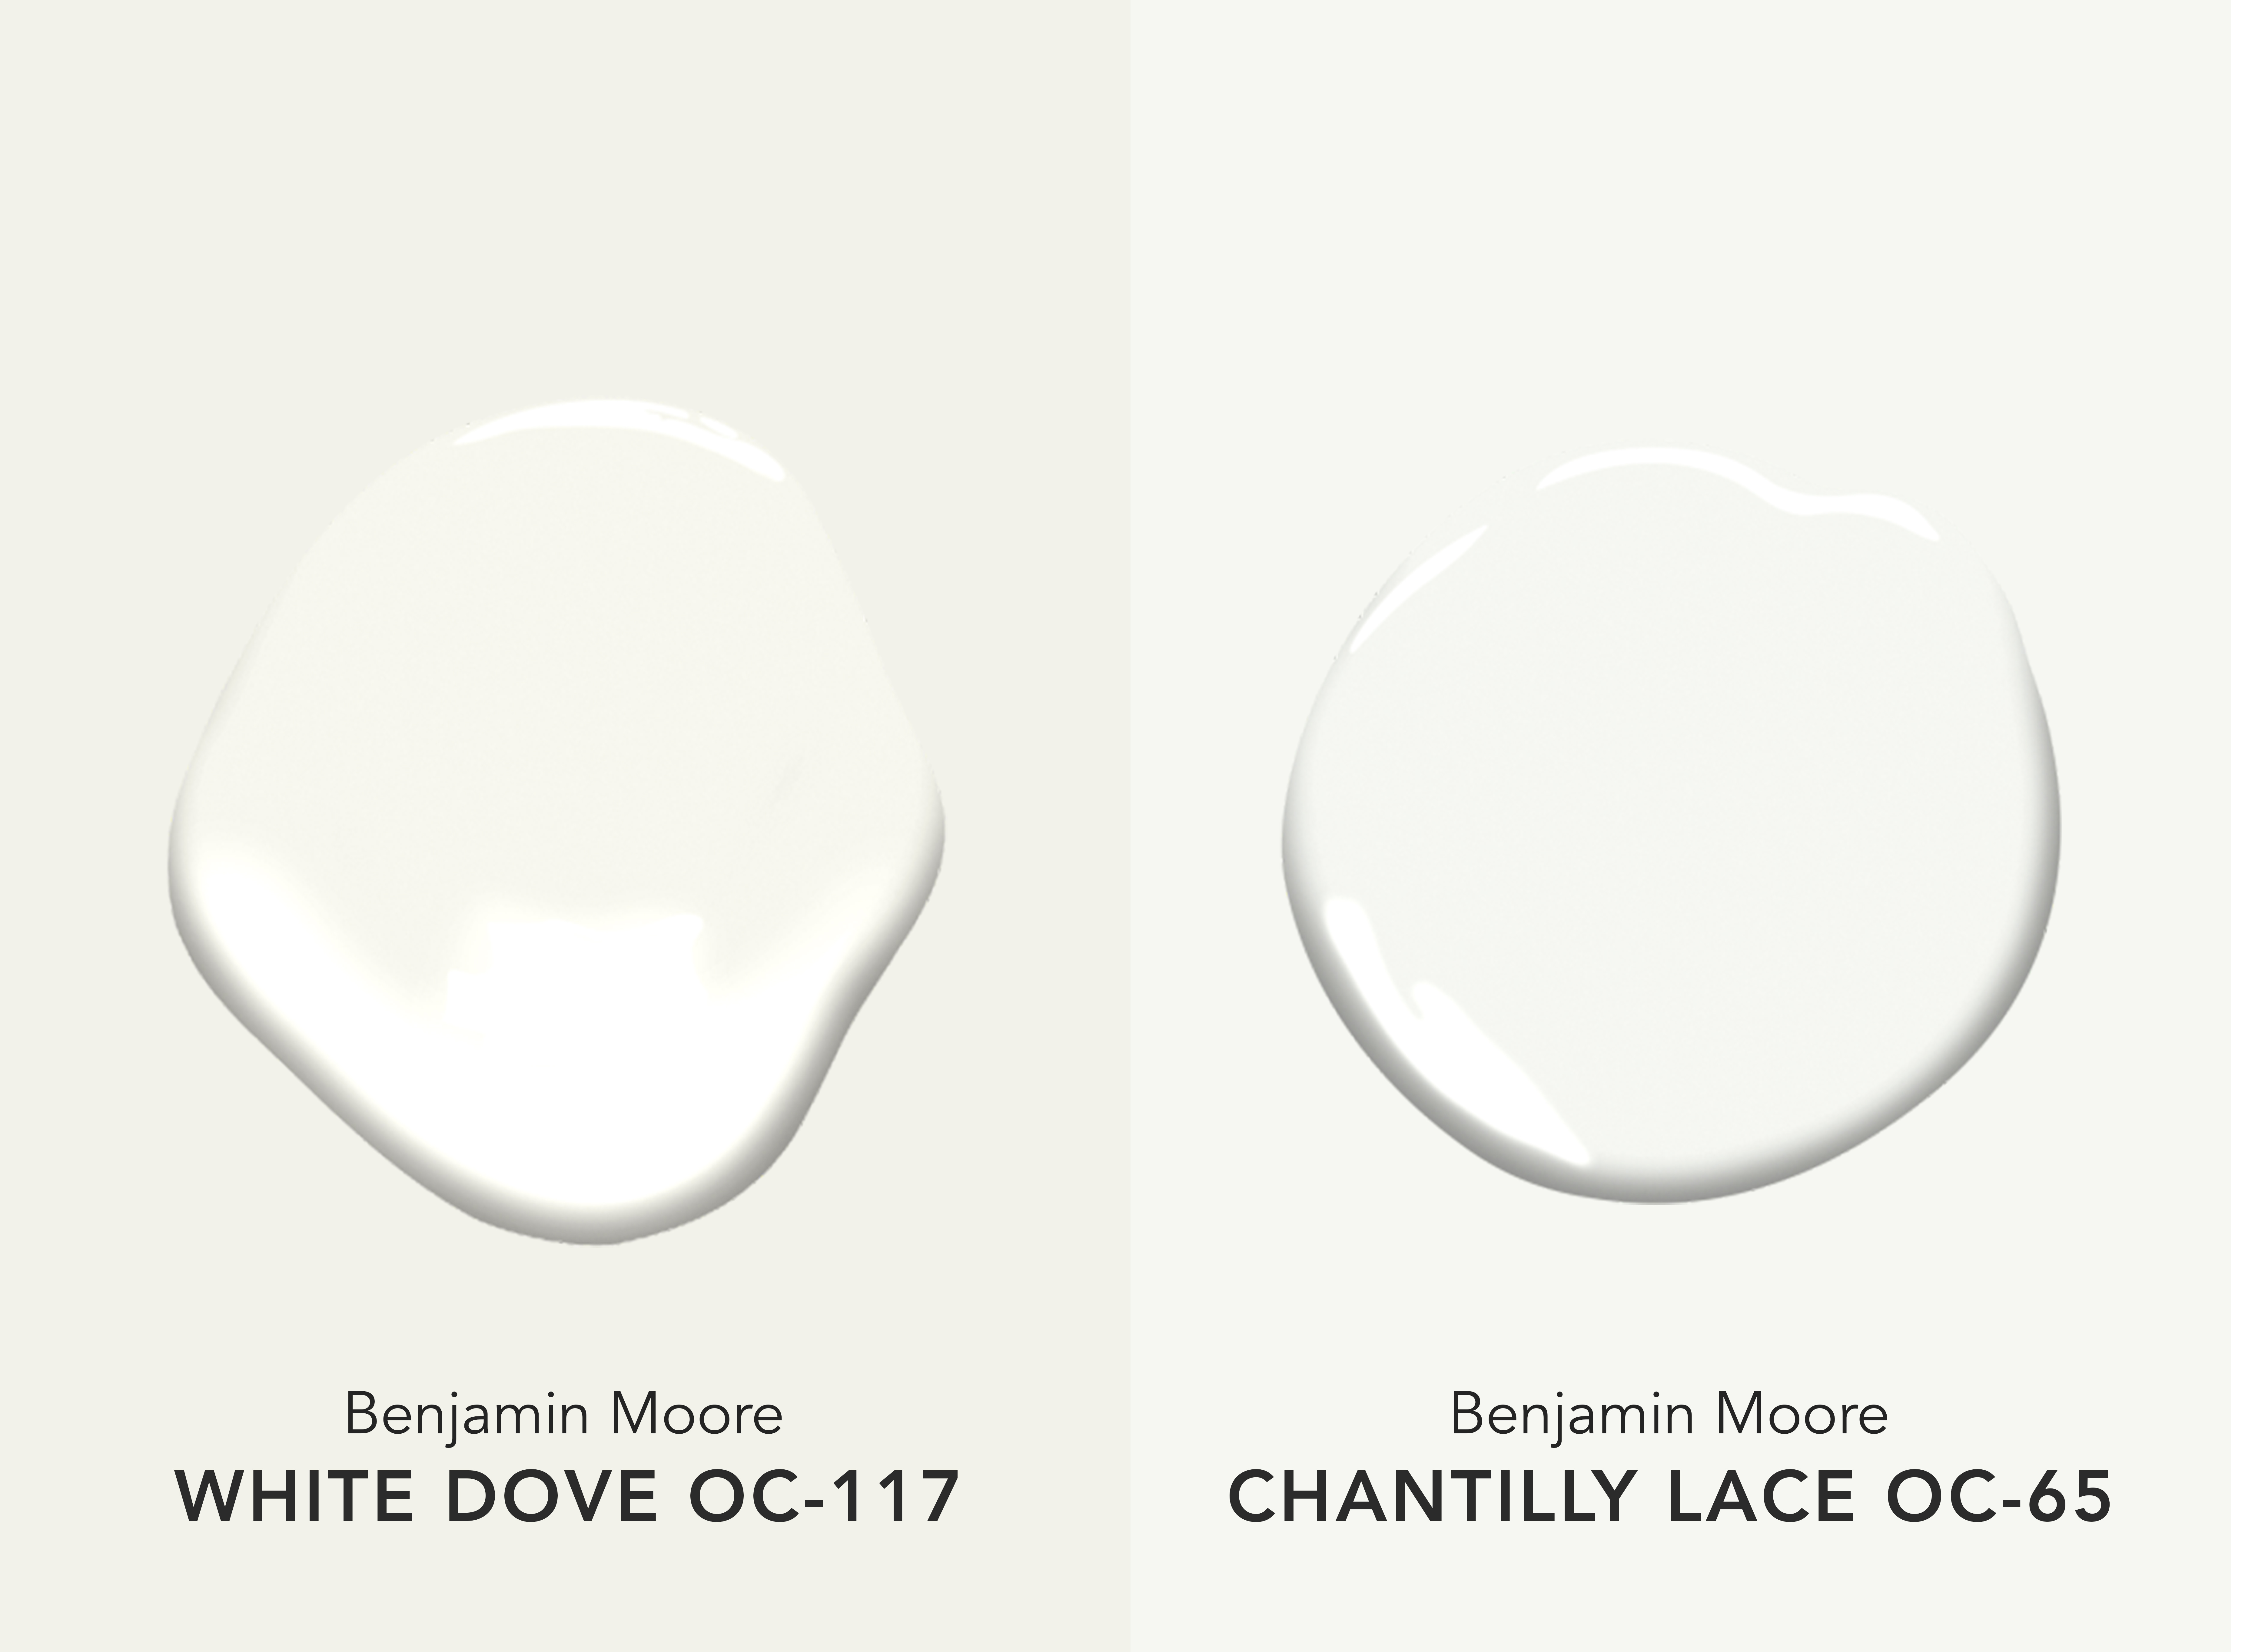 Benjamin Moore White Dove OC-17 vs Benjamin Moore Chantilly Lace OC-65